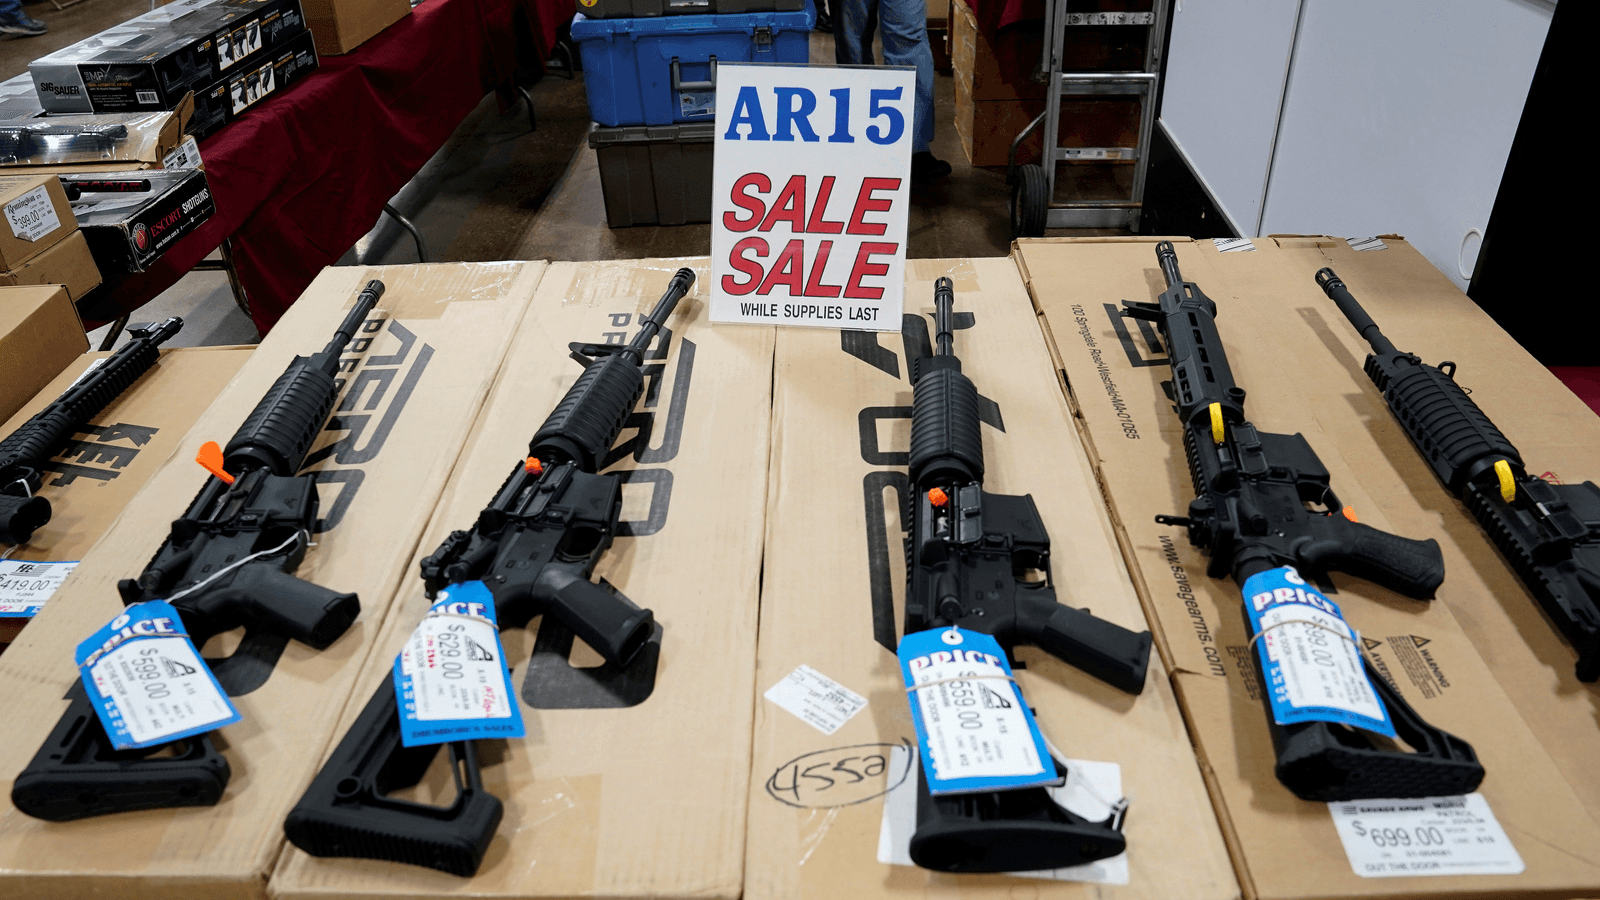 AR-15 rifles are displayed for sale at the Guntoberfest gun show in Oaks, Pennsylvania, Oct. 6, 2017.